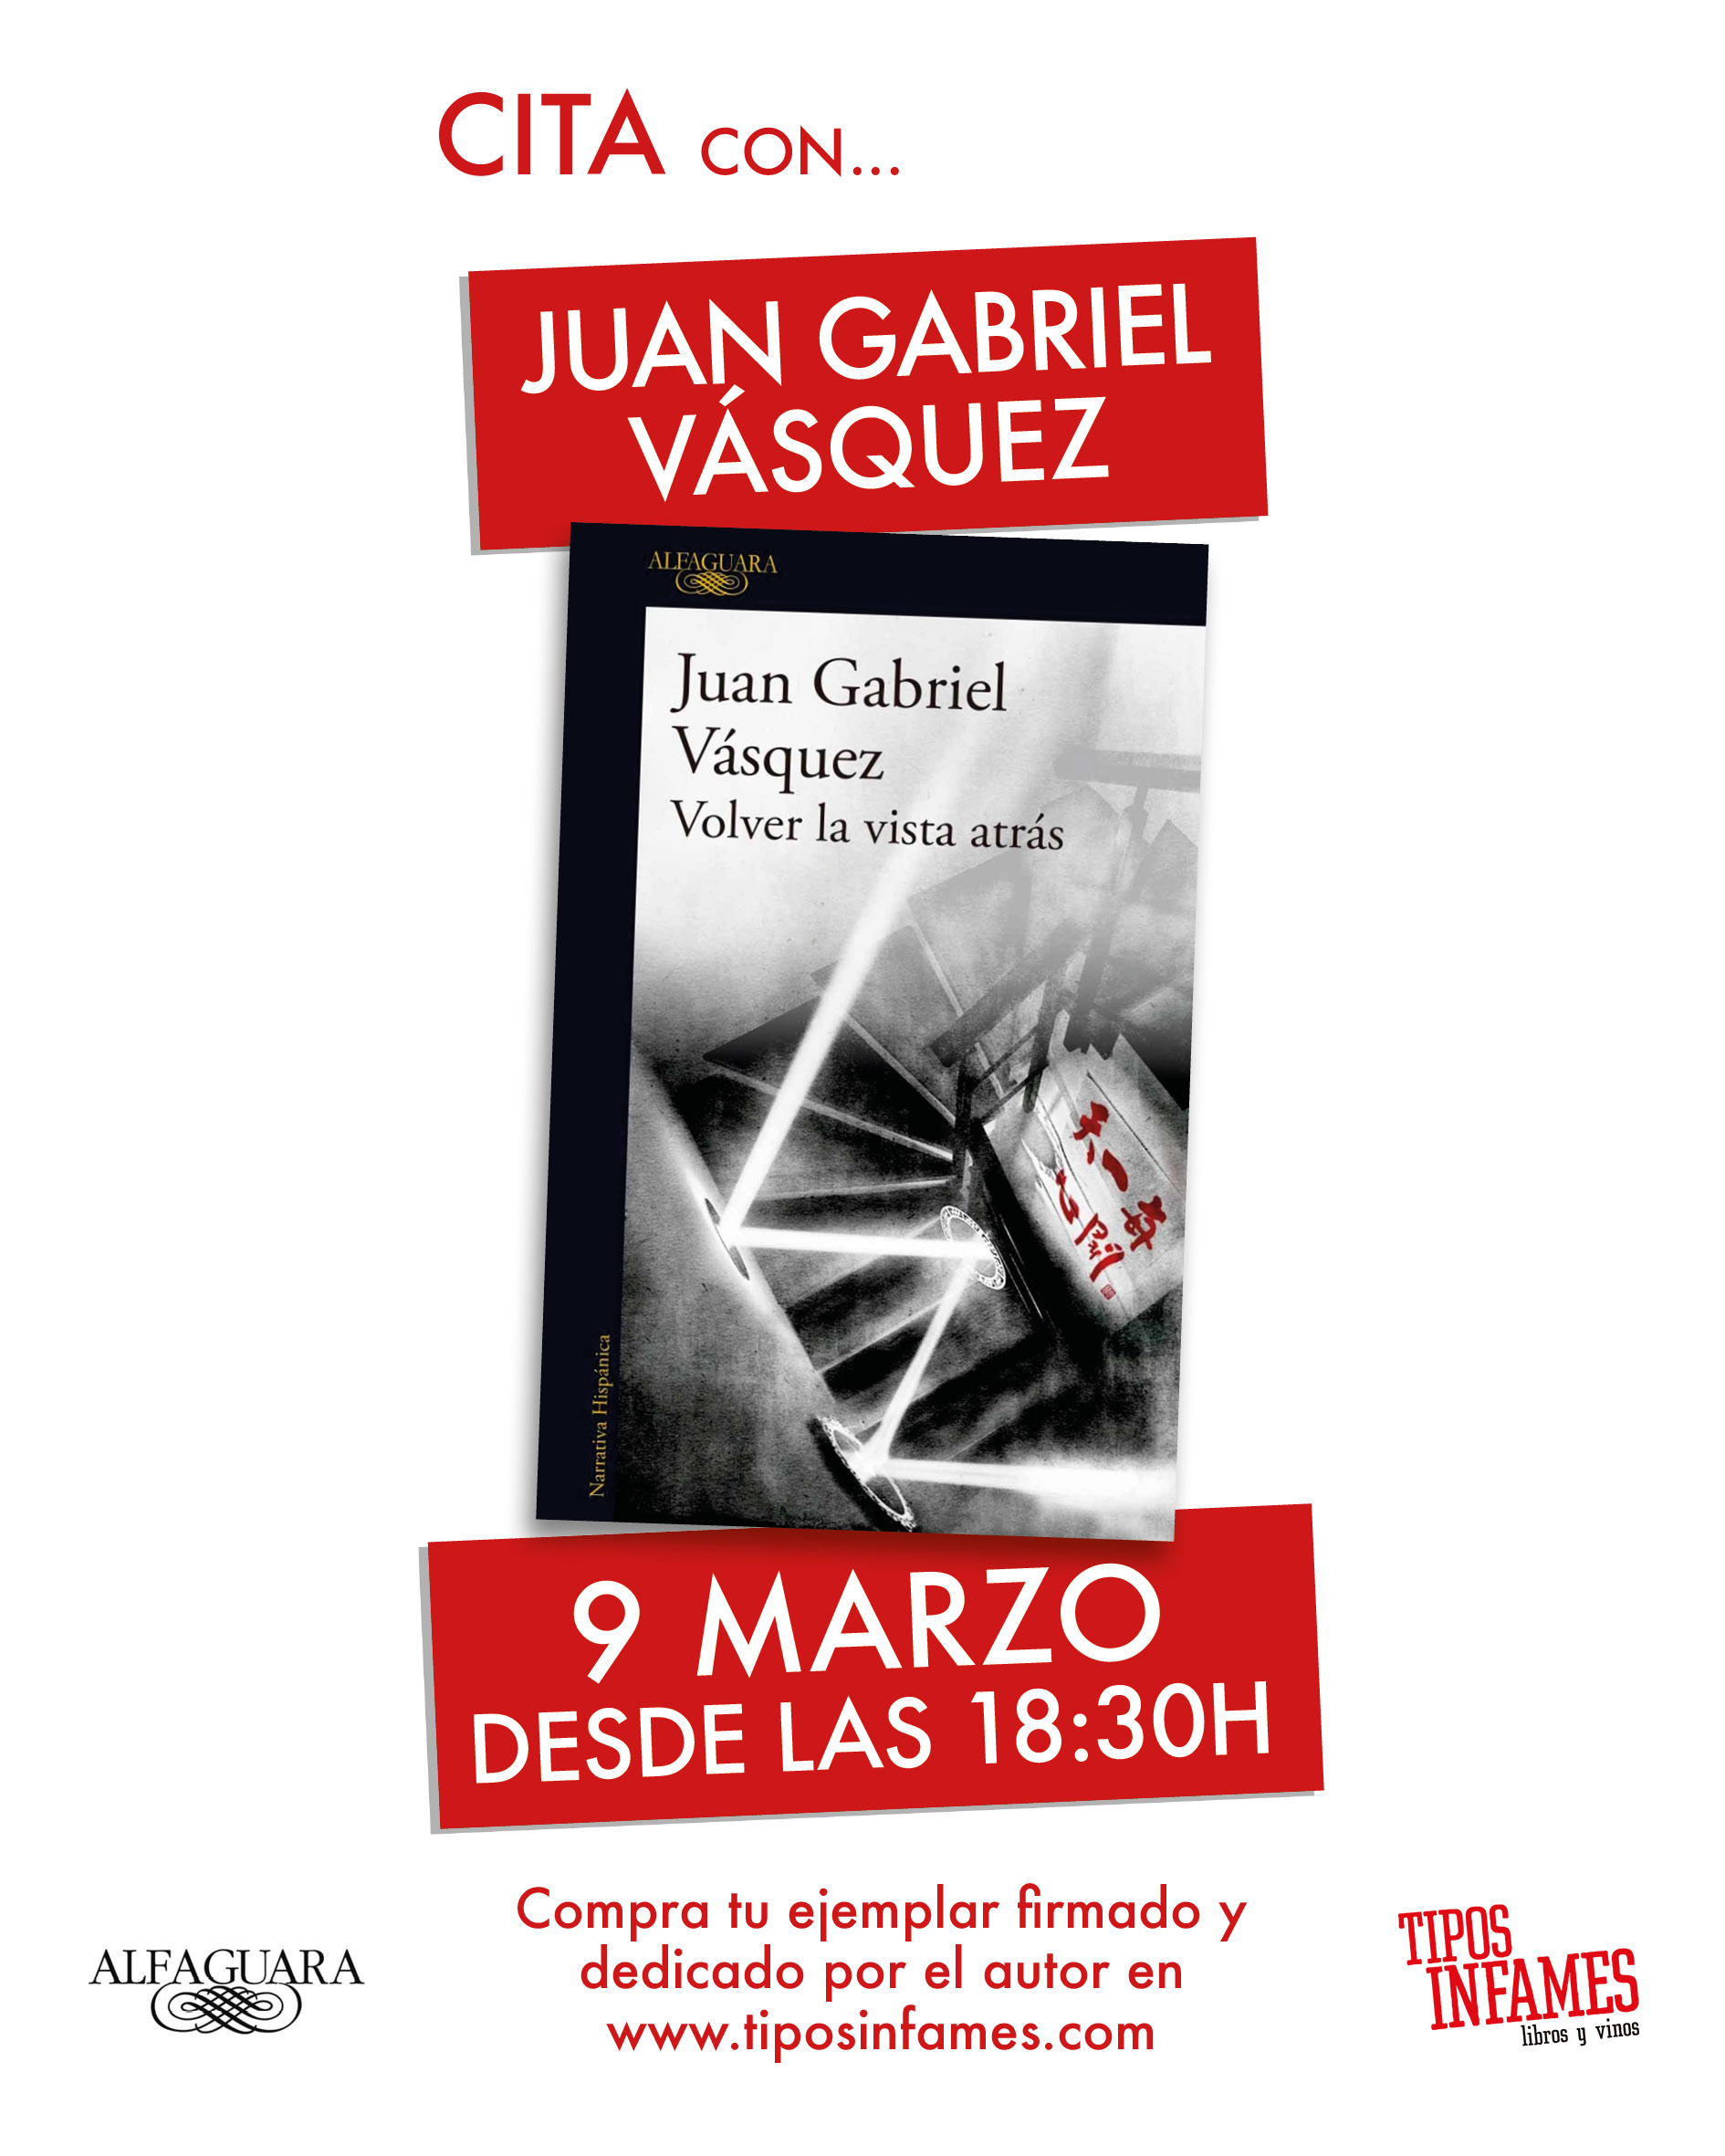 Cita con... Juan Gabriel Vásquez